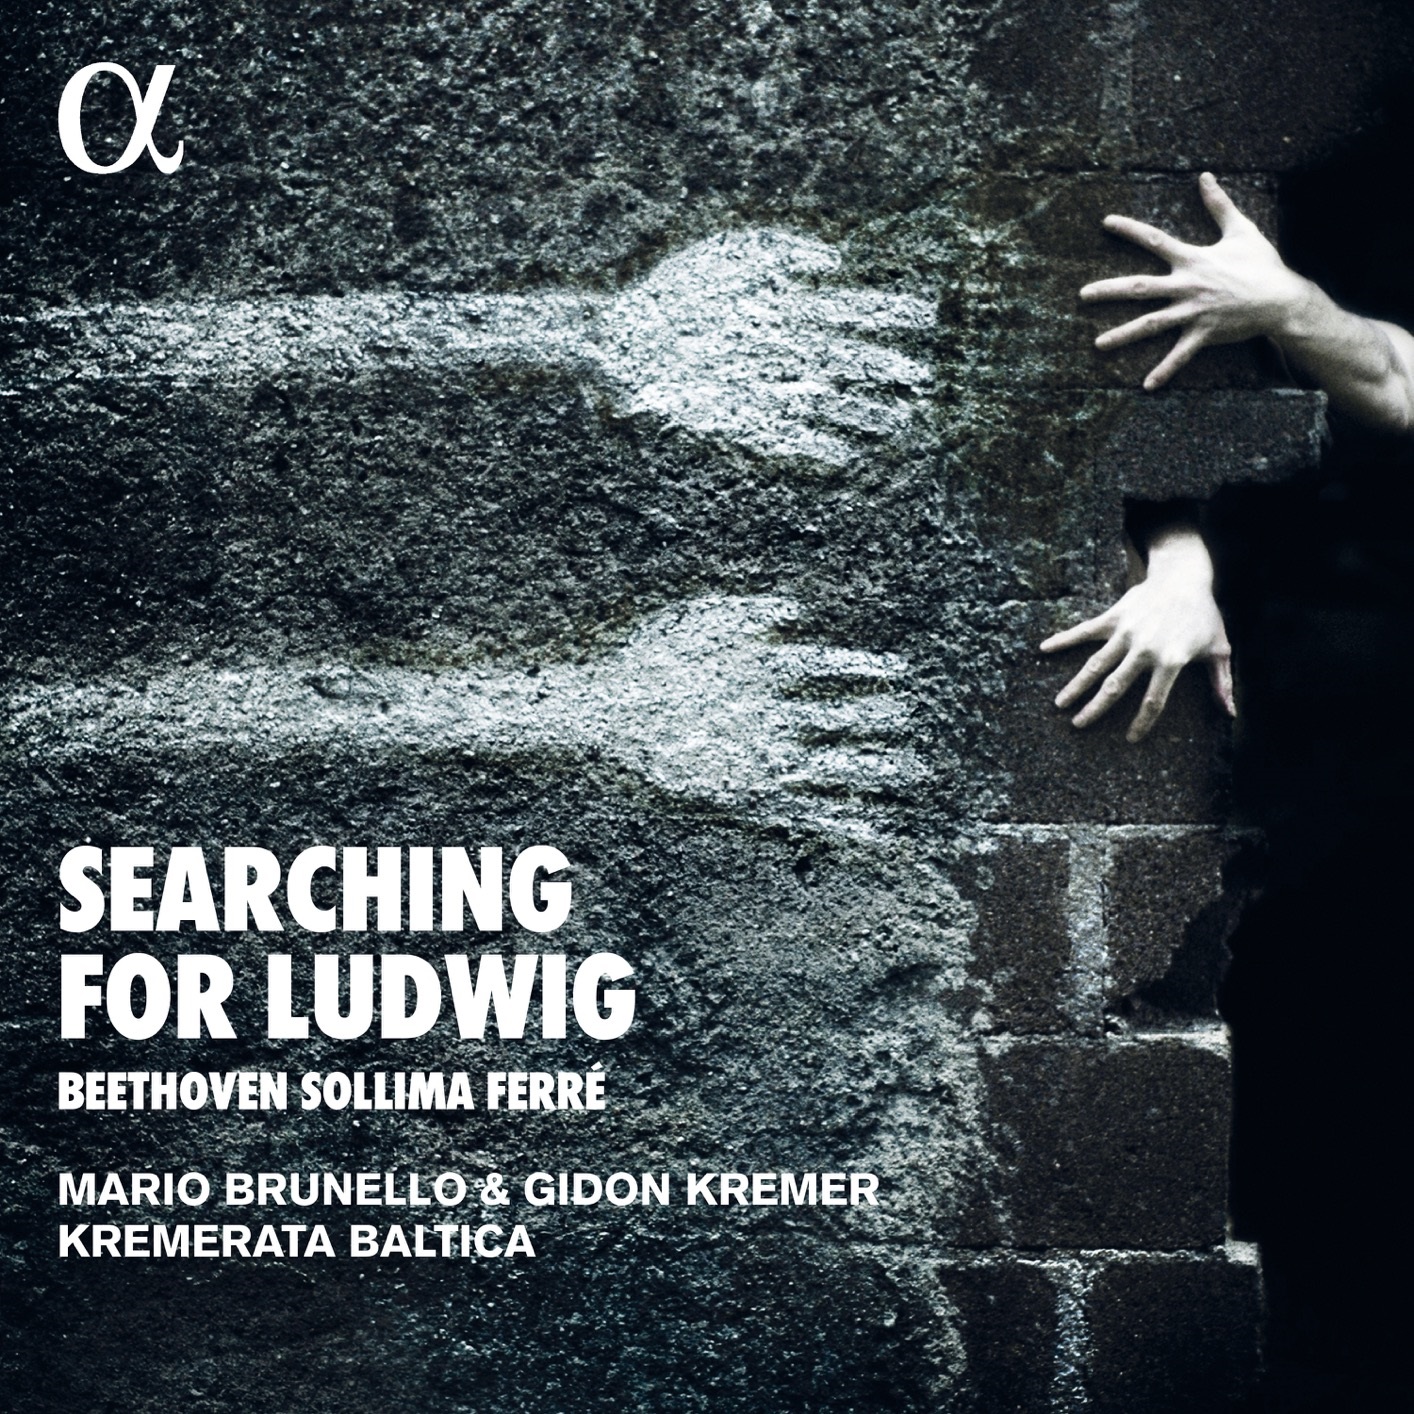 Mario Brunello, Gidon Kremer & Kremerata Baltica - Searching for Ludwig (2020) [FLAC 24bit/48kHz]